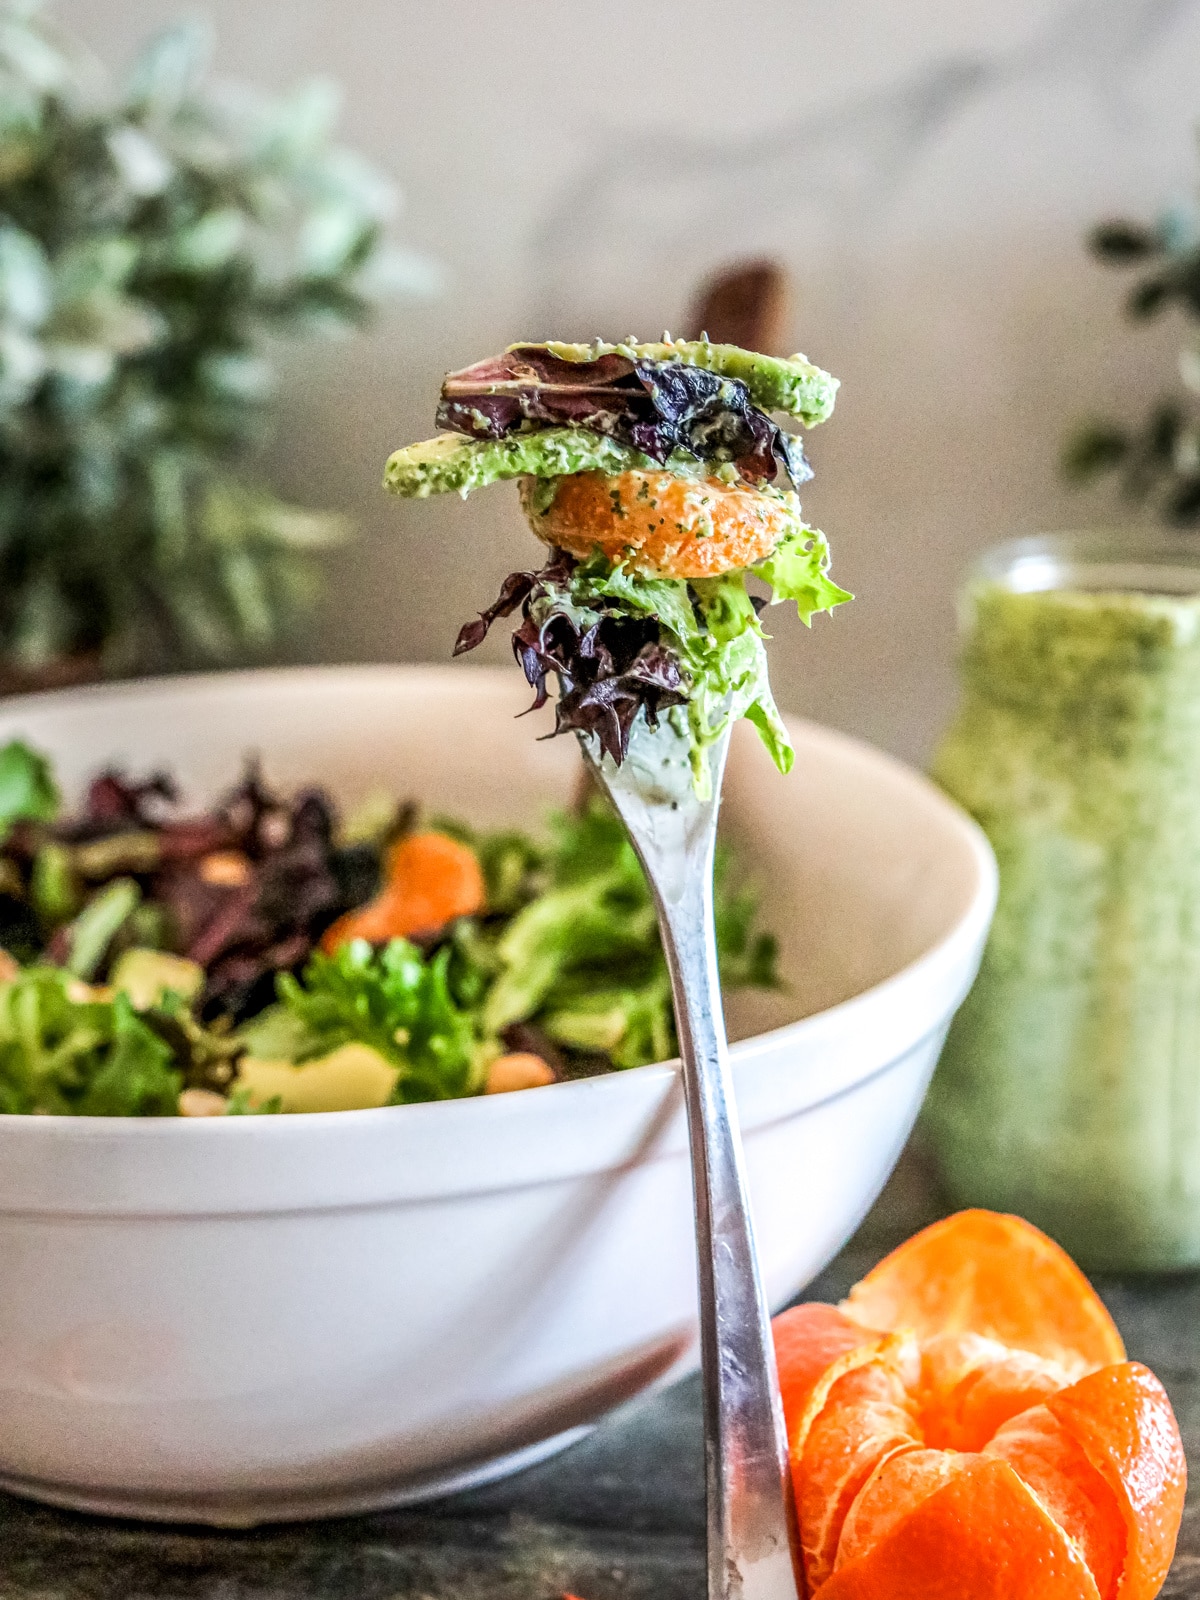 Spring Salad and Dressing bite on a fork